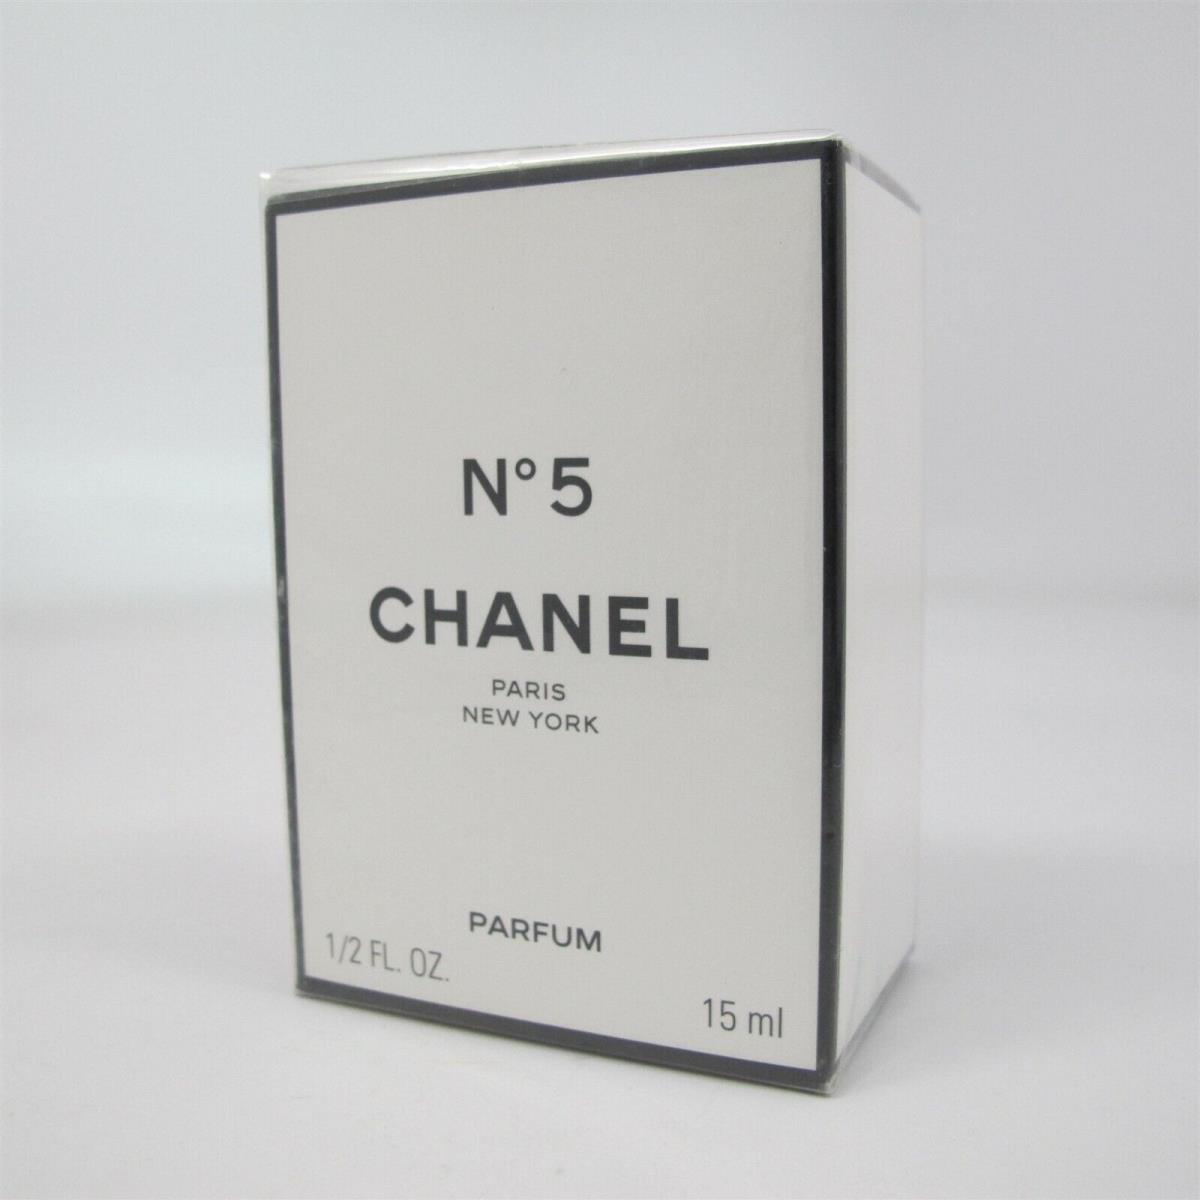 Chanel No. 5 by Chanel 15 Ml/ 0.5 oz Parfum Splash Vintage